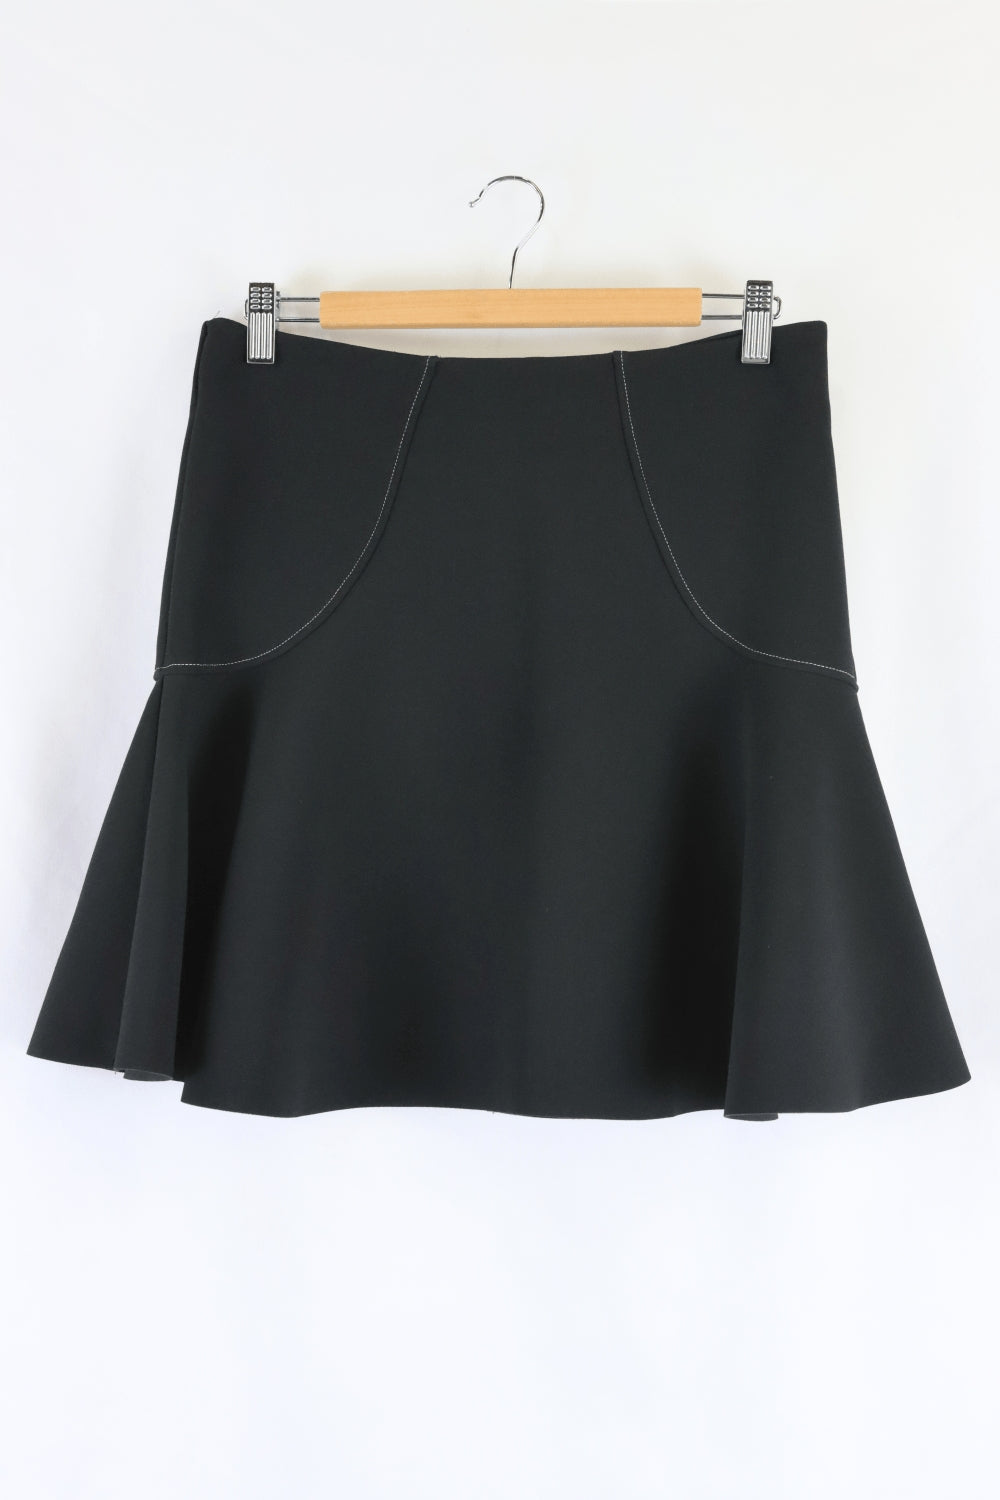 Next Skirts Black Mini Skirt 10